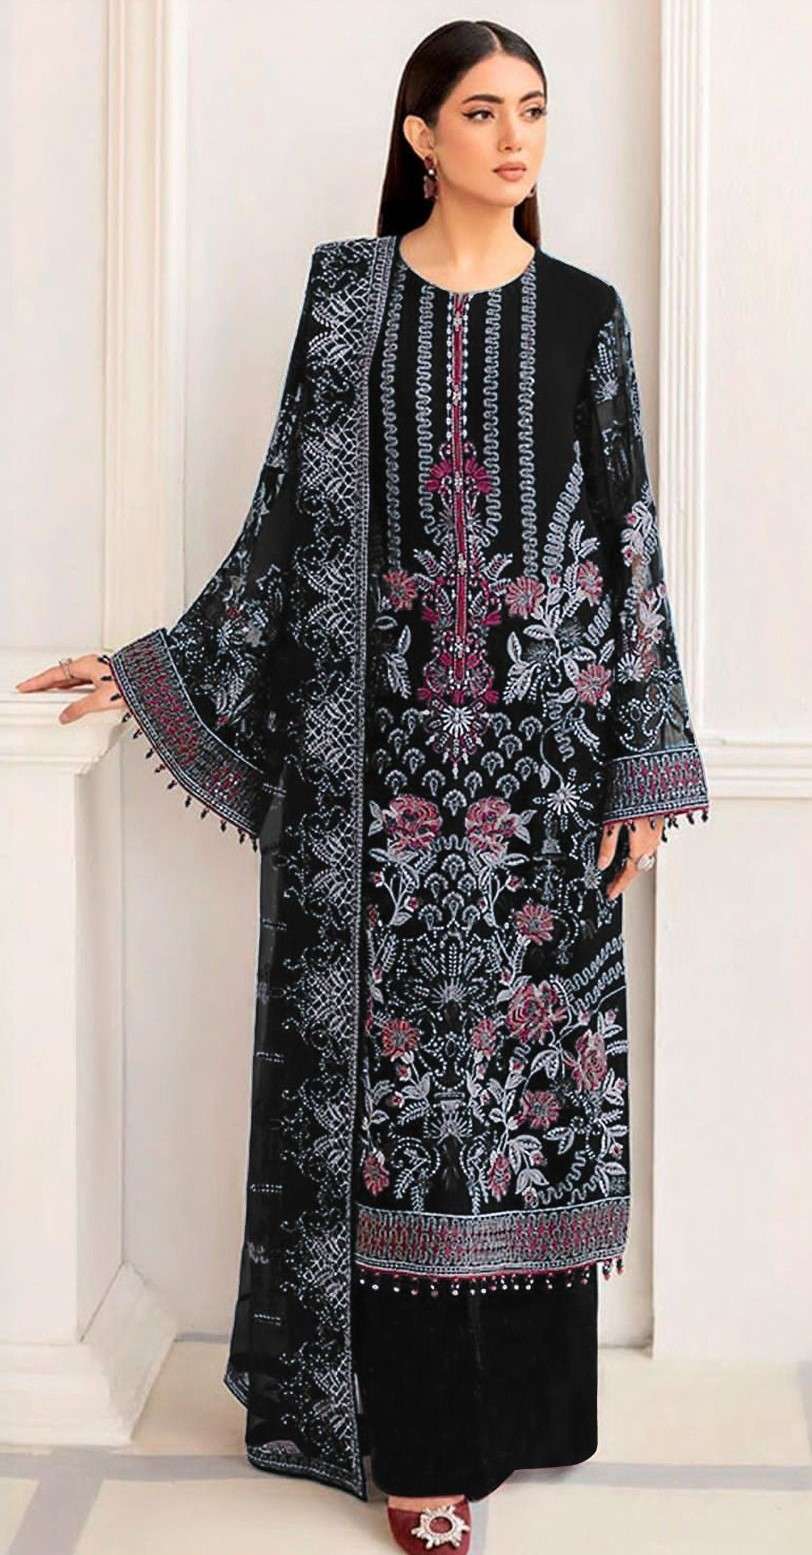 bilqis b-41 a to d embroidered designer pakistani salwar suits at reasonable price surat gujrat